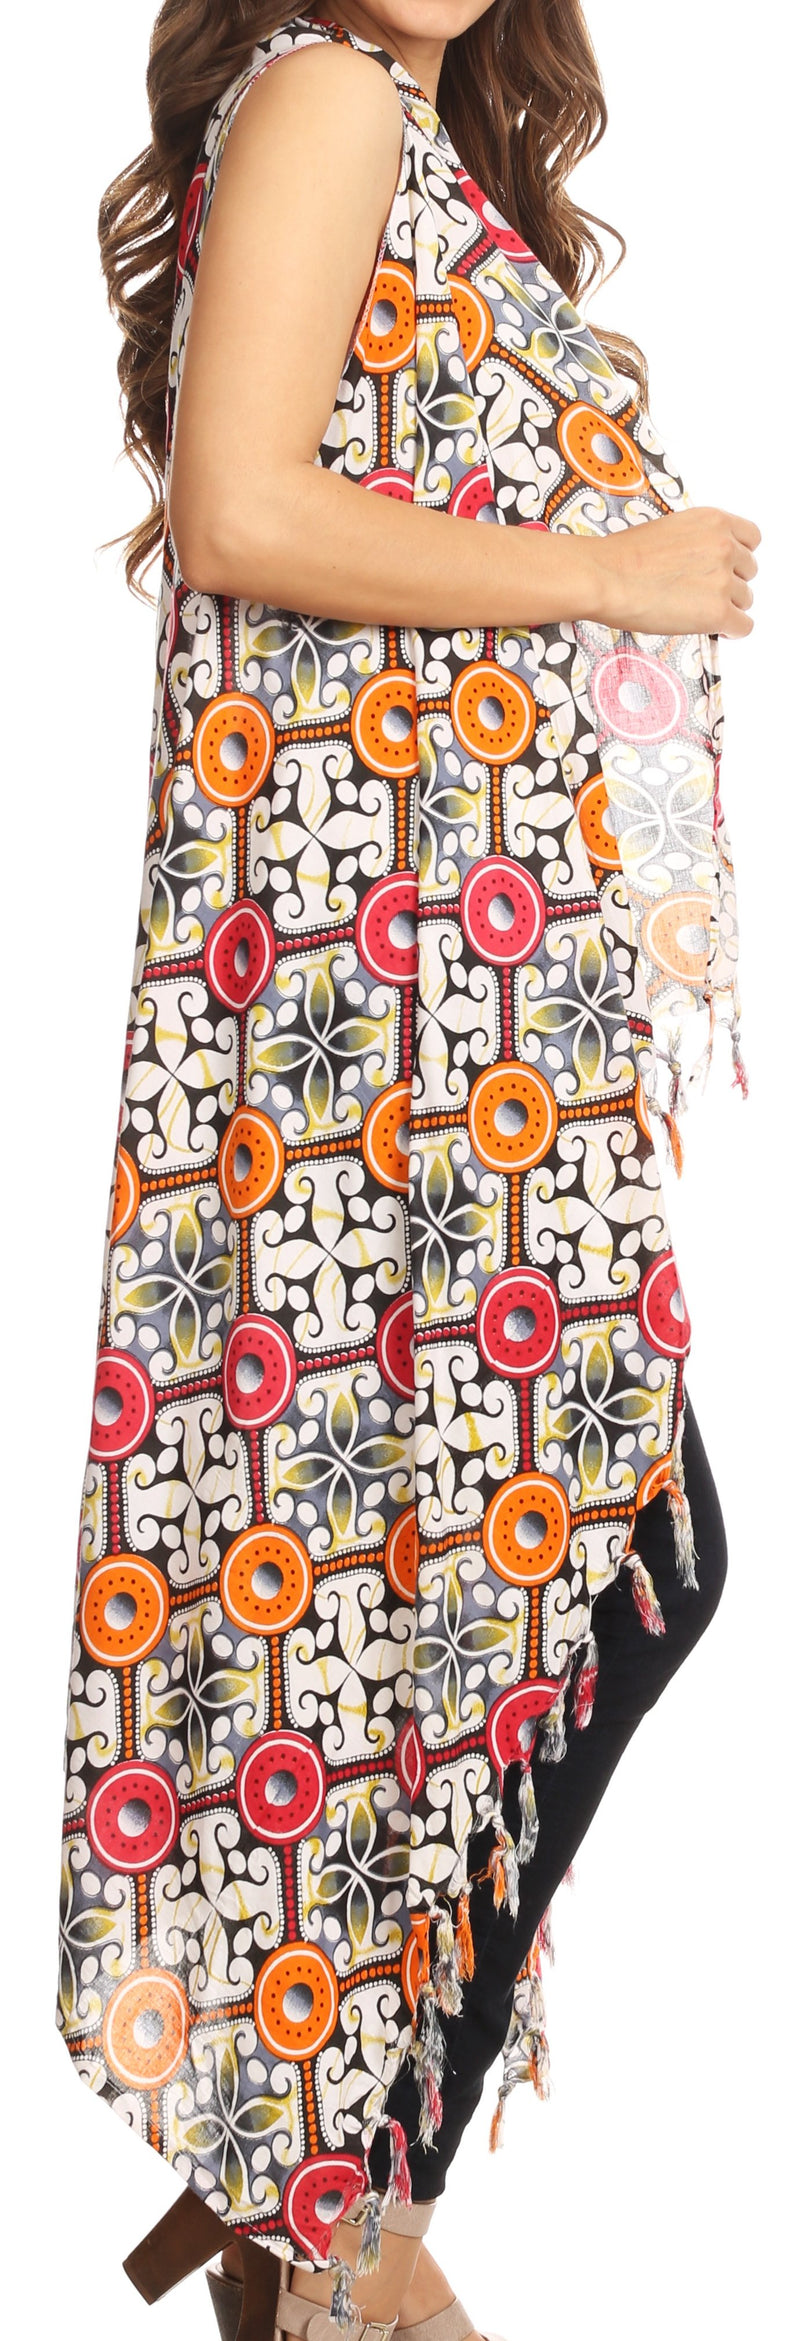 Sakkas Hatice Light Colorful Poncho Wrap Cardigan Top with African Ankara Print